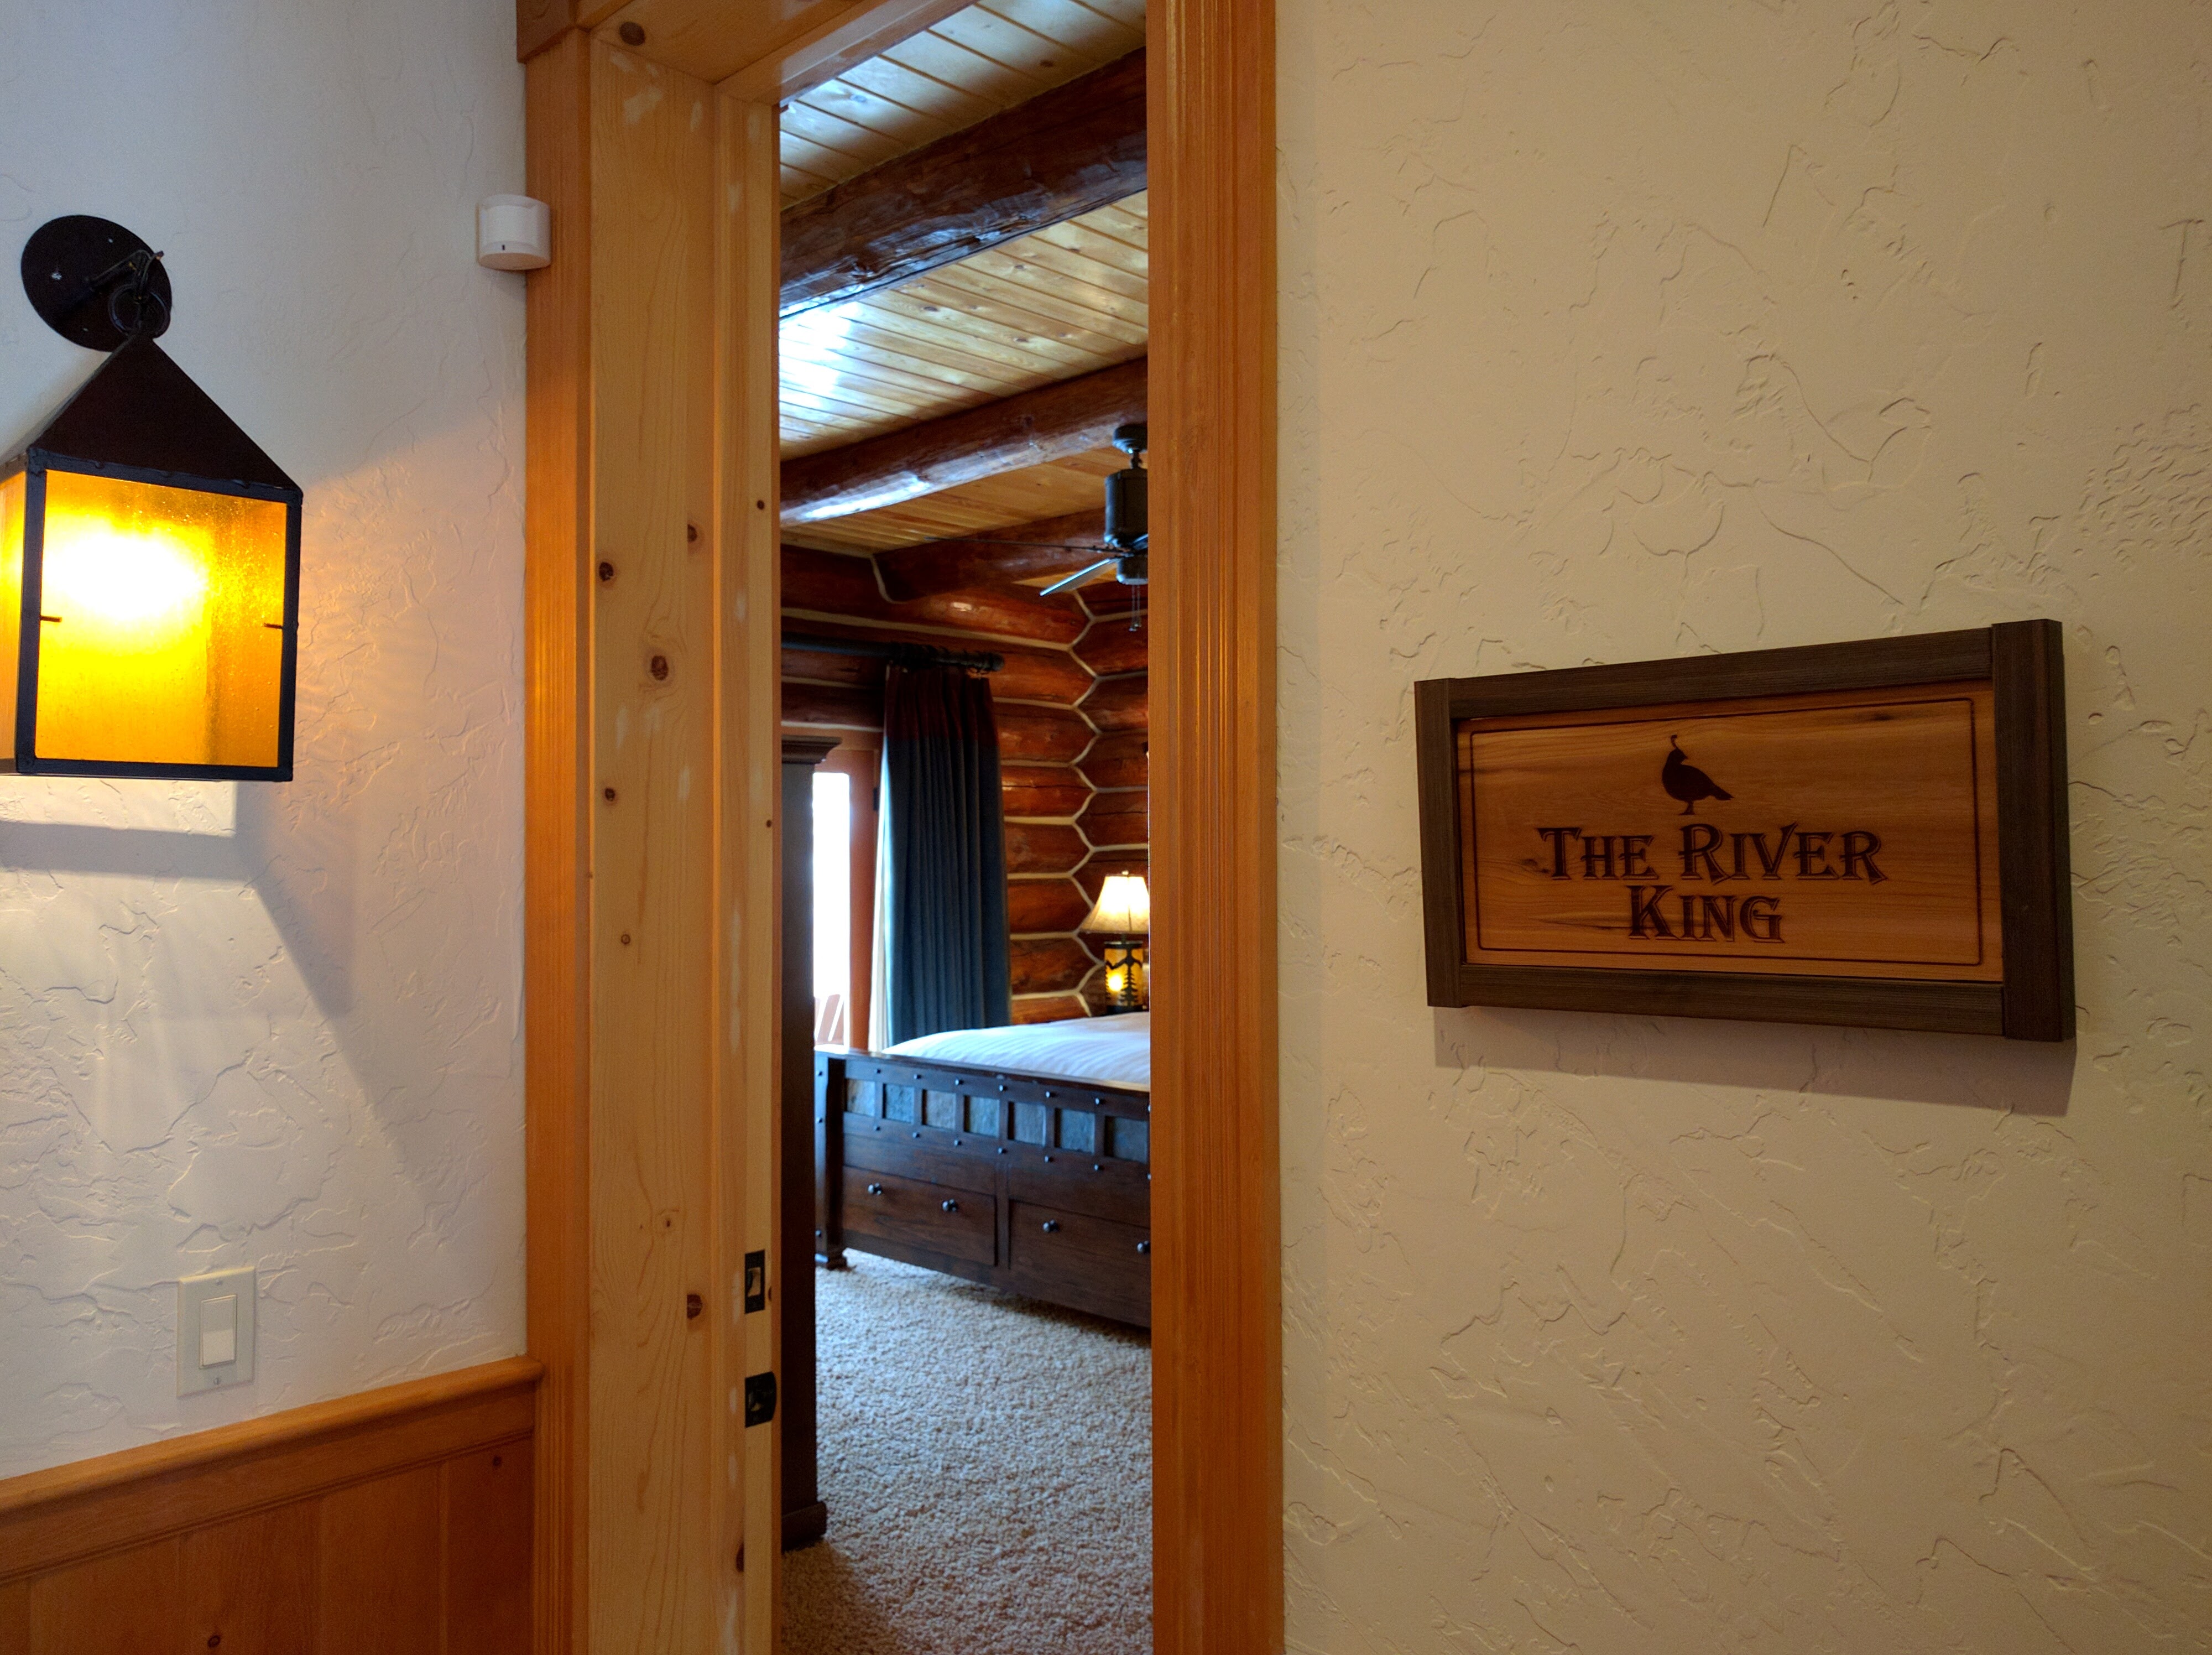 grand river lodge room sign